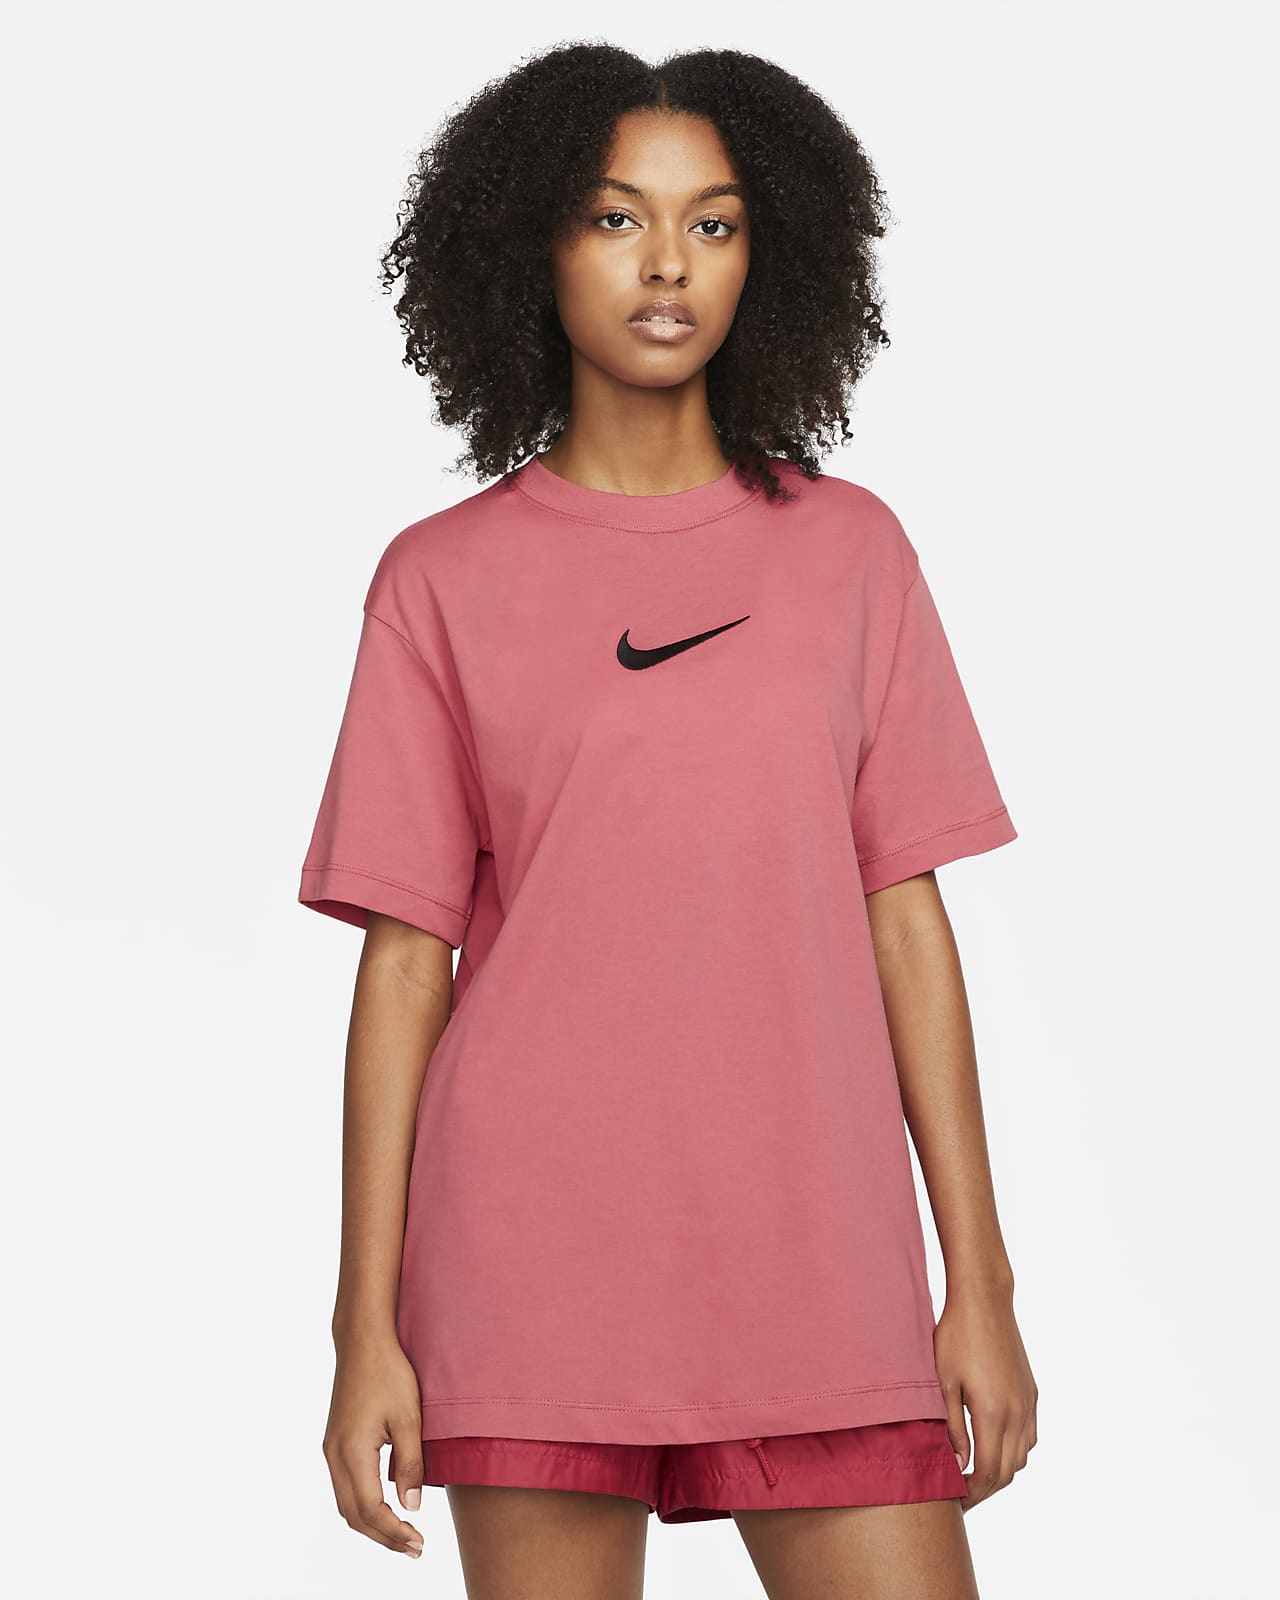 contenido Aumentar Cartas credenciales Nike Sportswear Women's T-Shirt. Nike.com